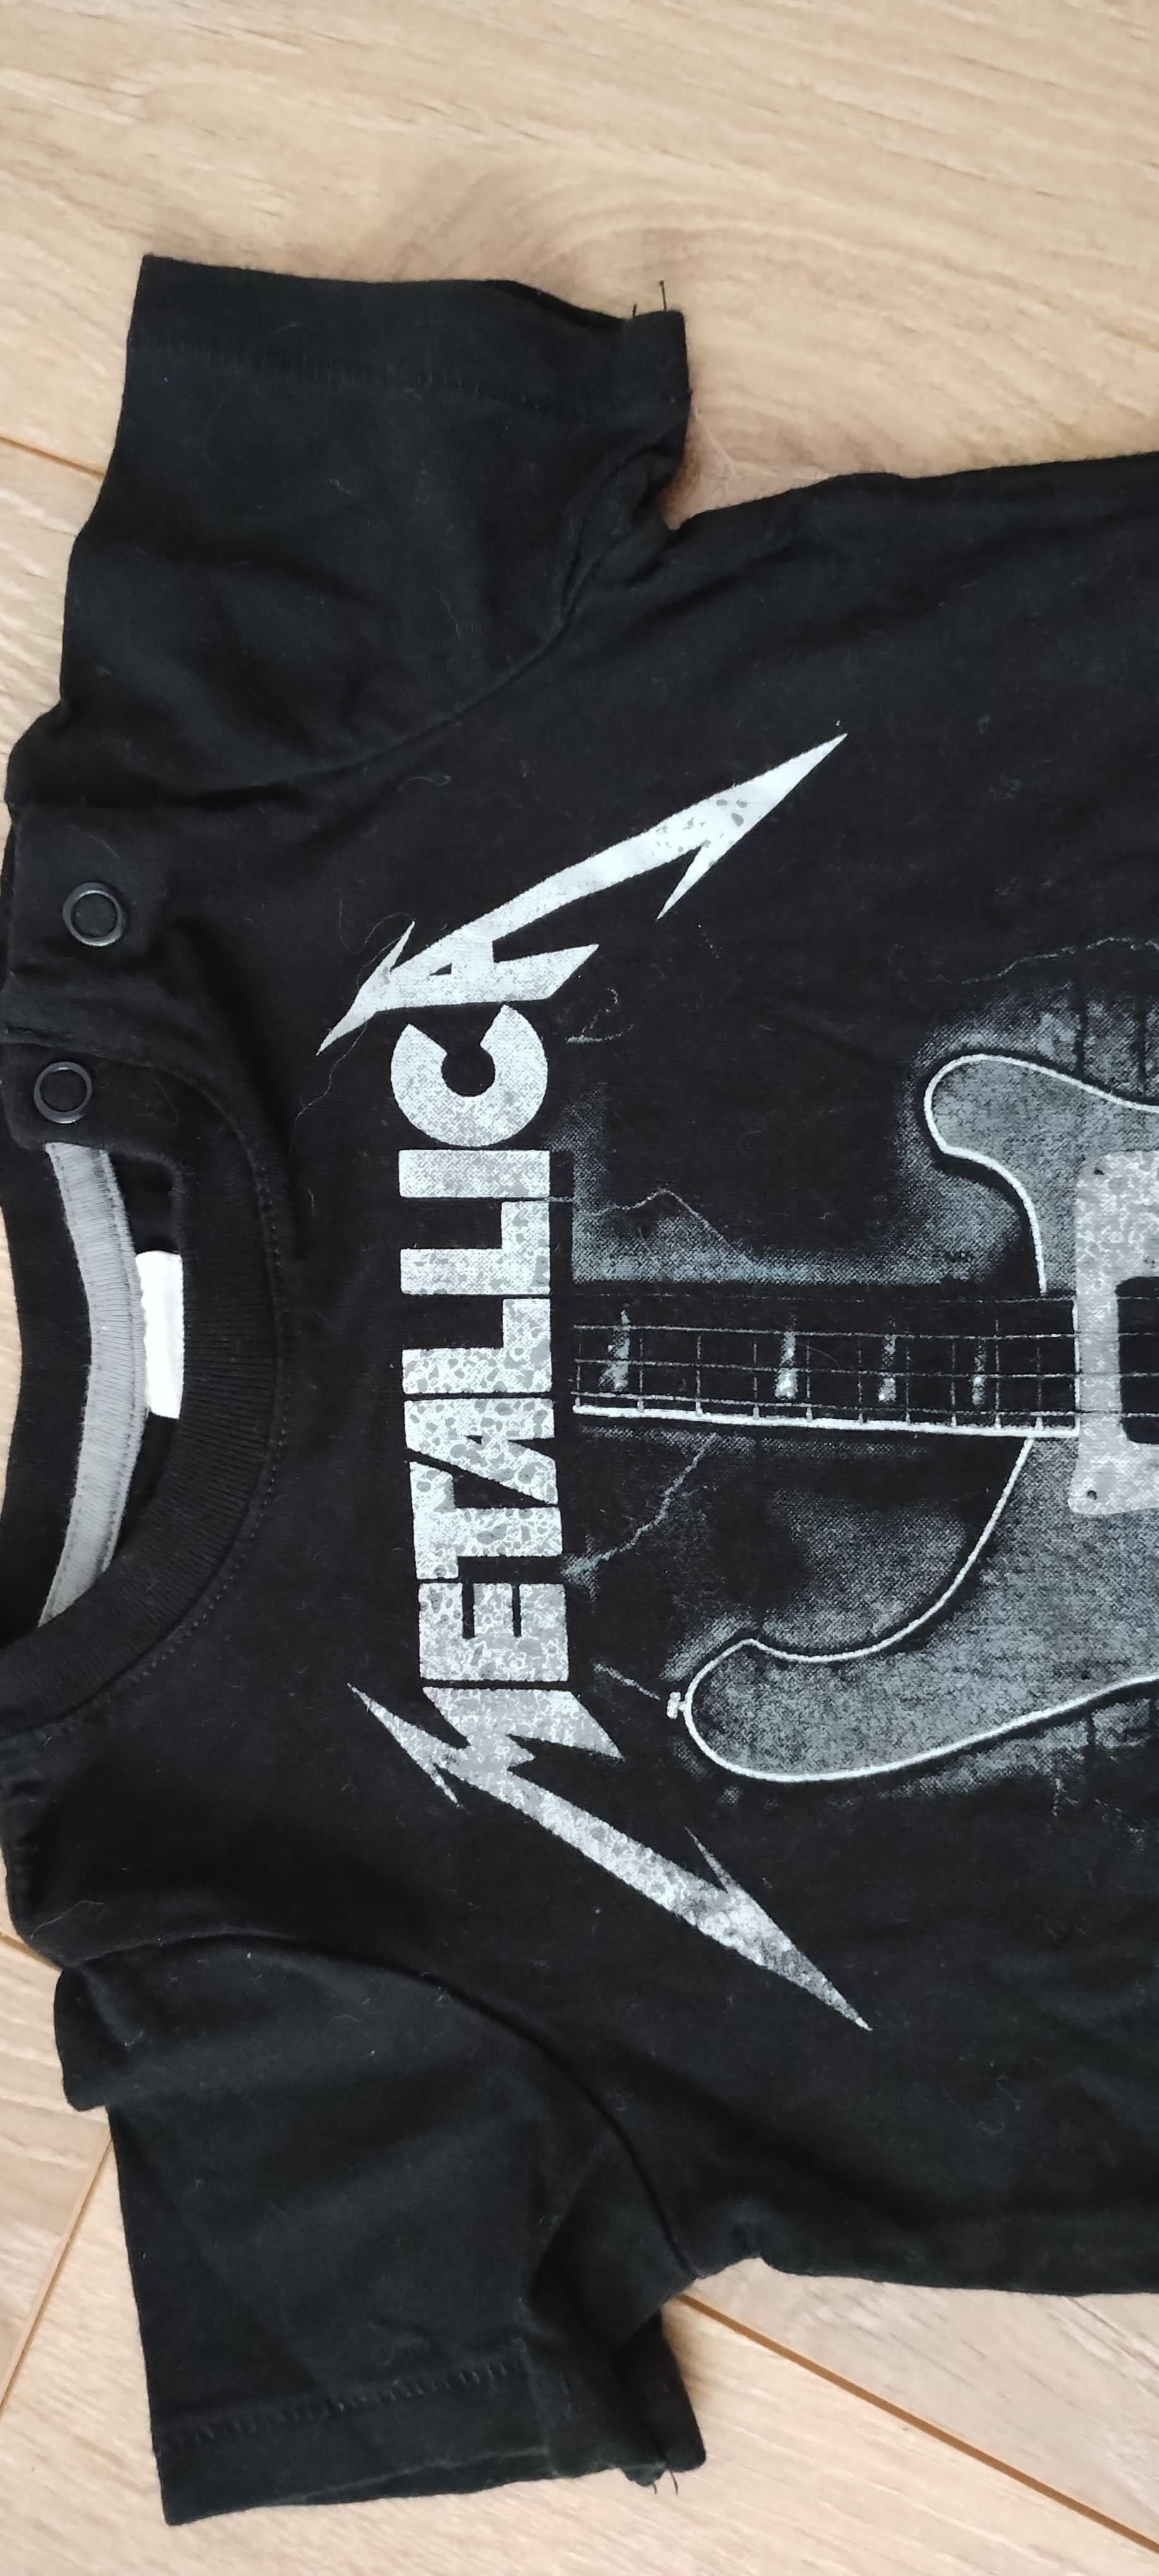 tshirt Metallica dla niemowlaka 68 4-6 miesięcy